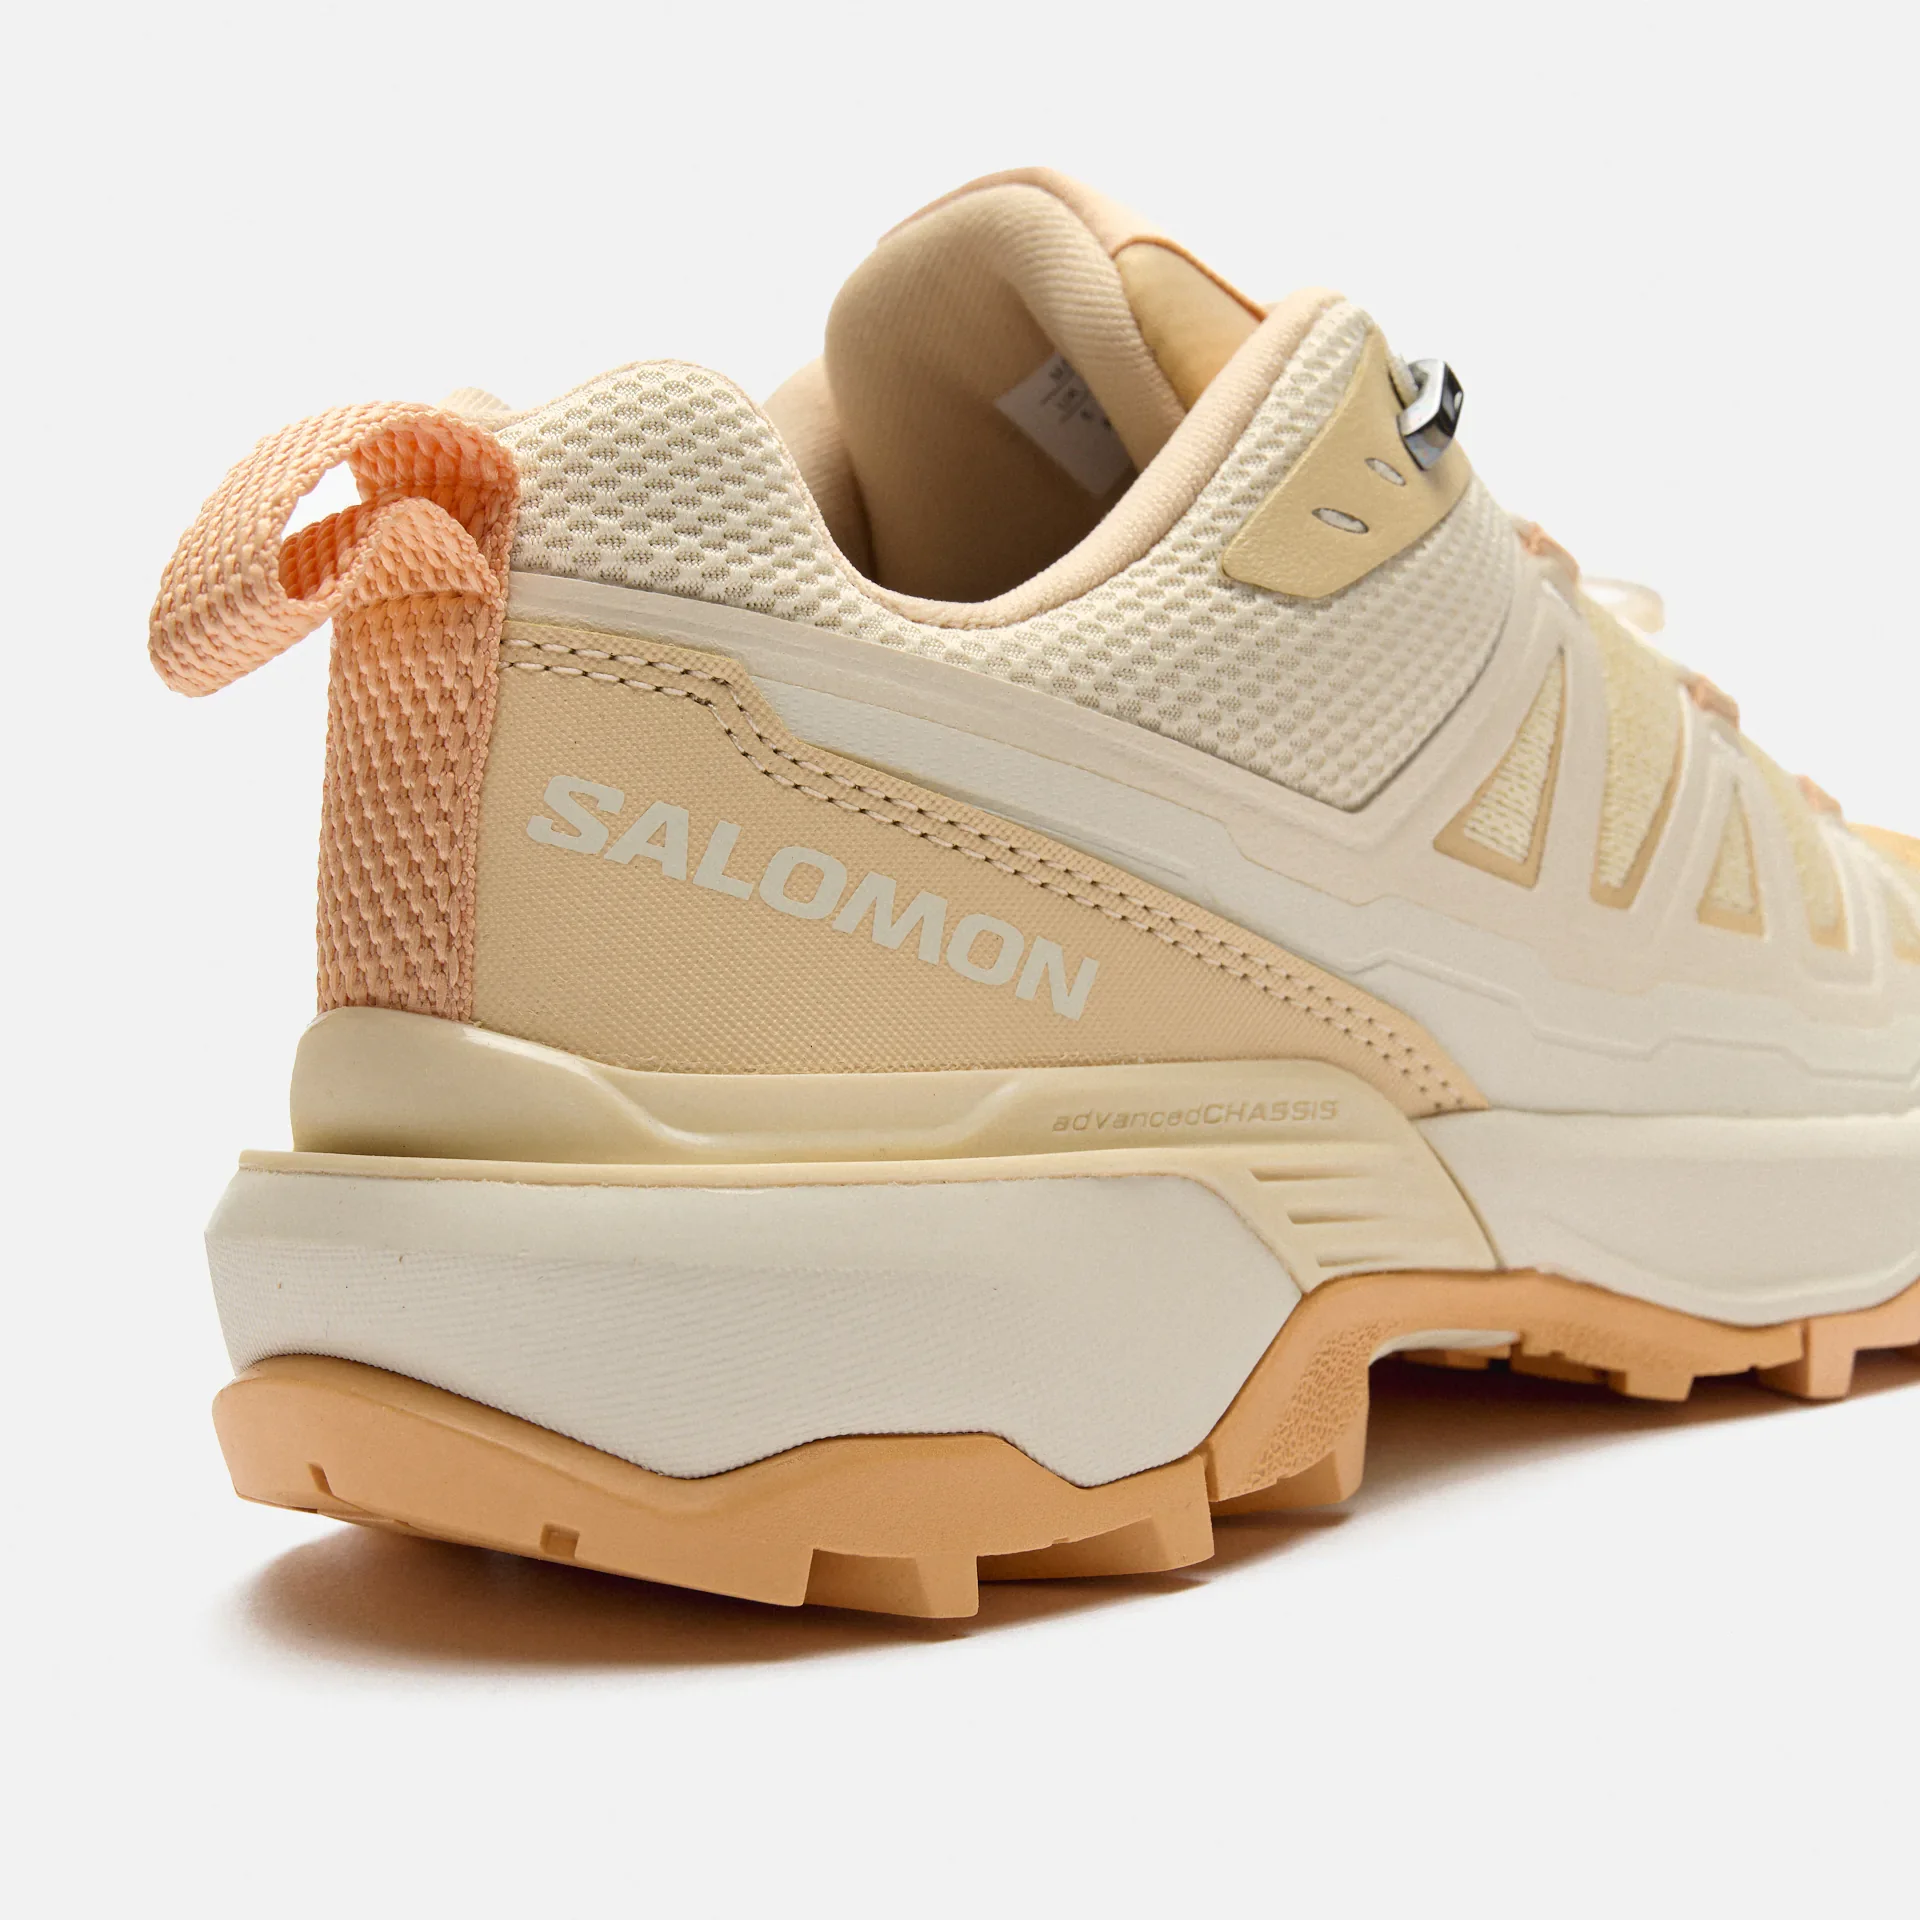 Salomon X Ultra 360 Edge Sneaker Wheat/Shortbread/Peach Quartz